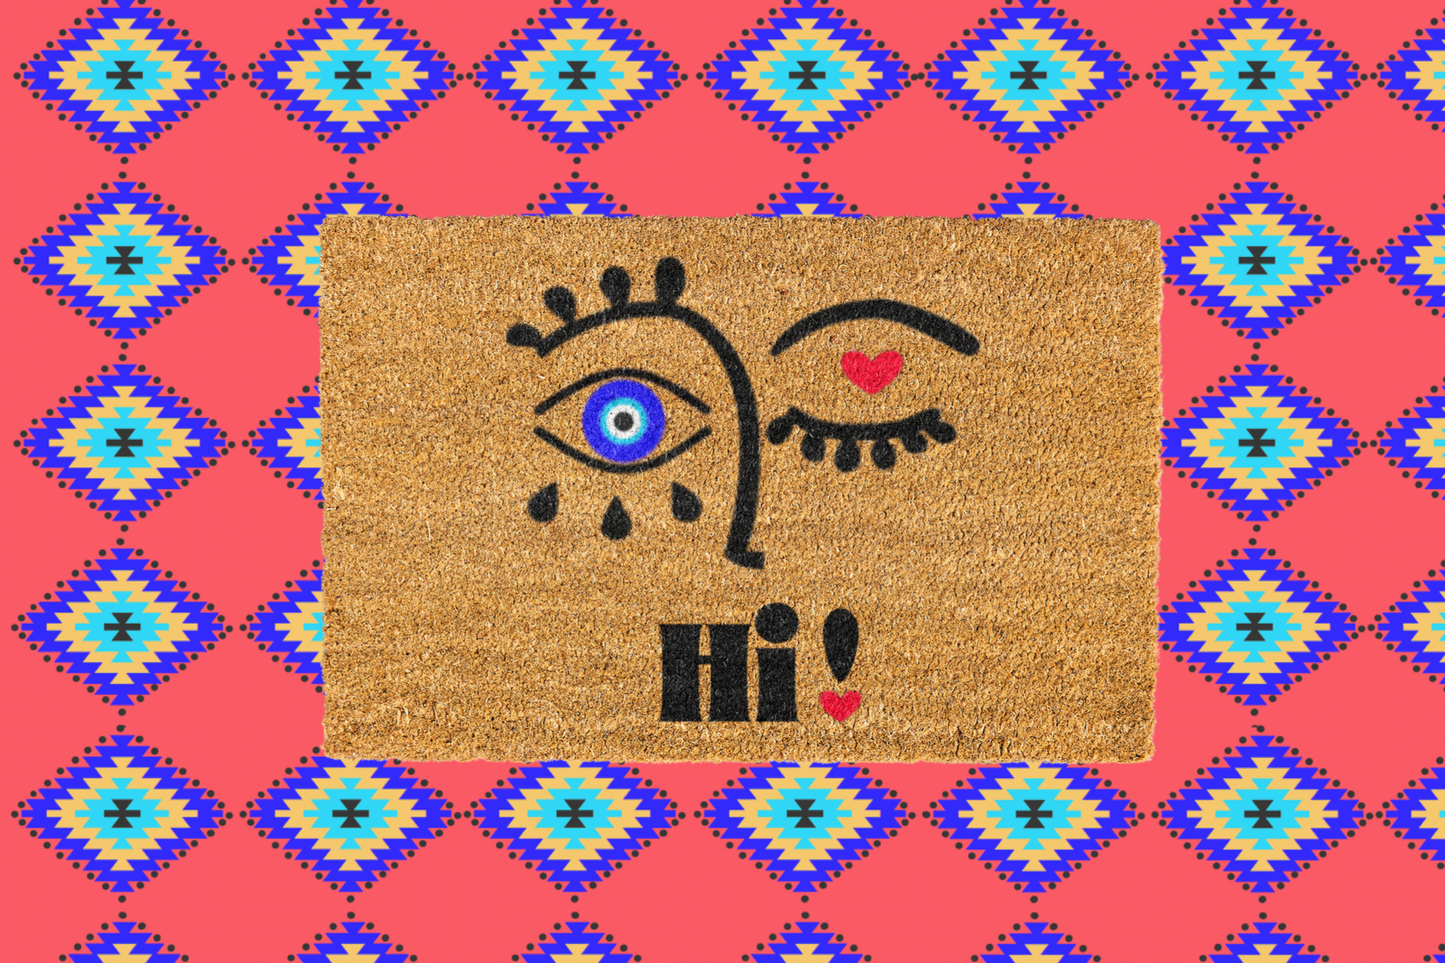 Amida Evil Eye Doormat, Woman Face Hi Doormat